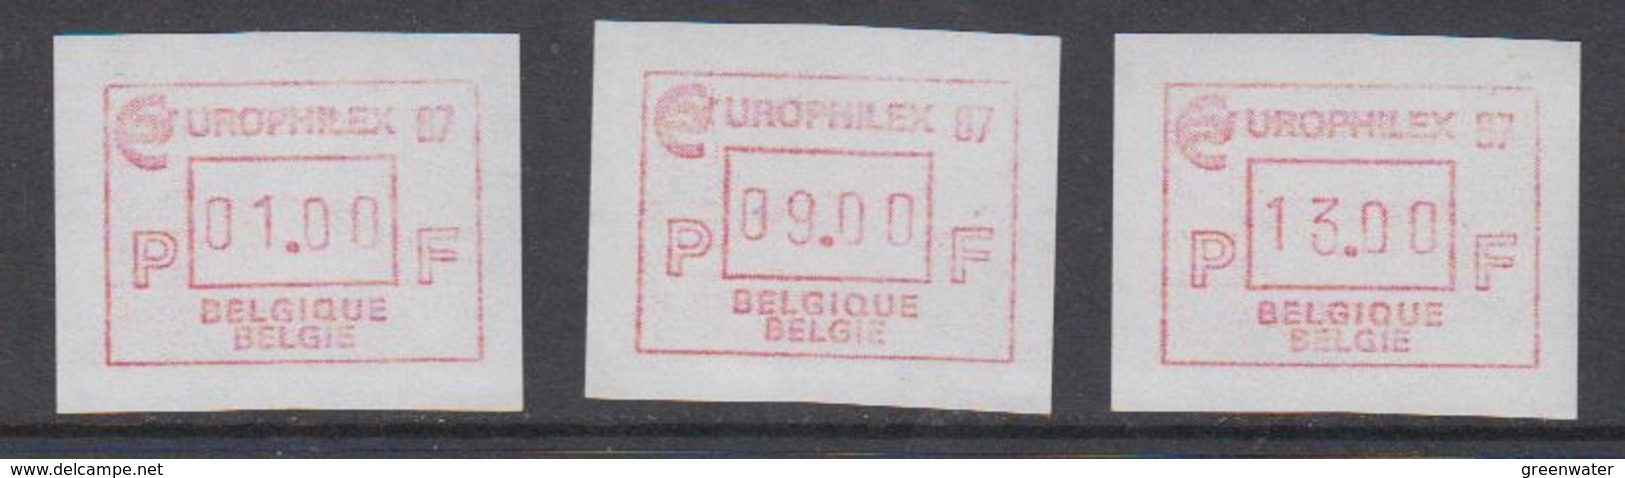 Belgie 1987 Frama / Europhilex 3w ** Mnh (44301) - Europese Gedachte